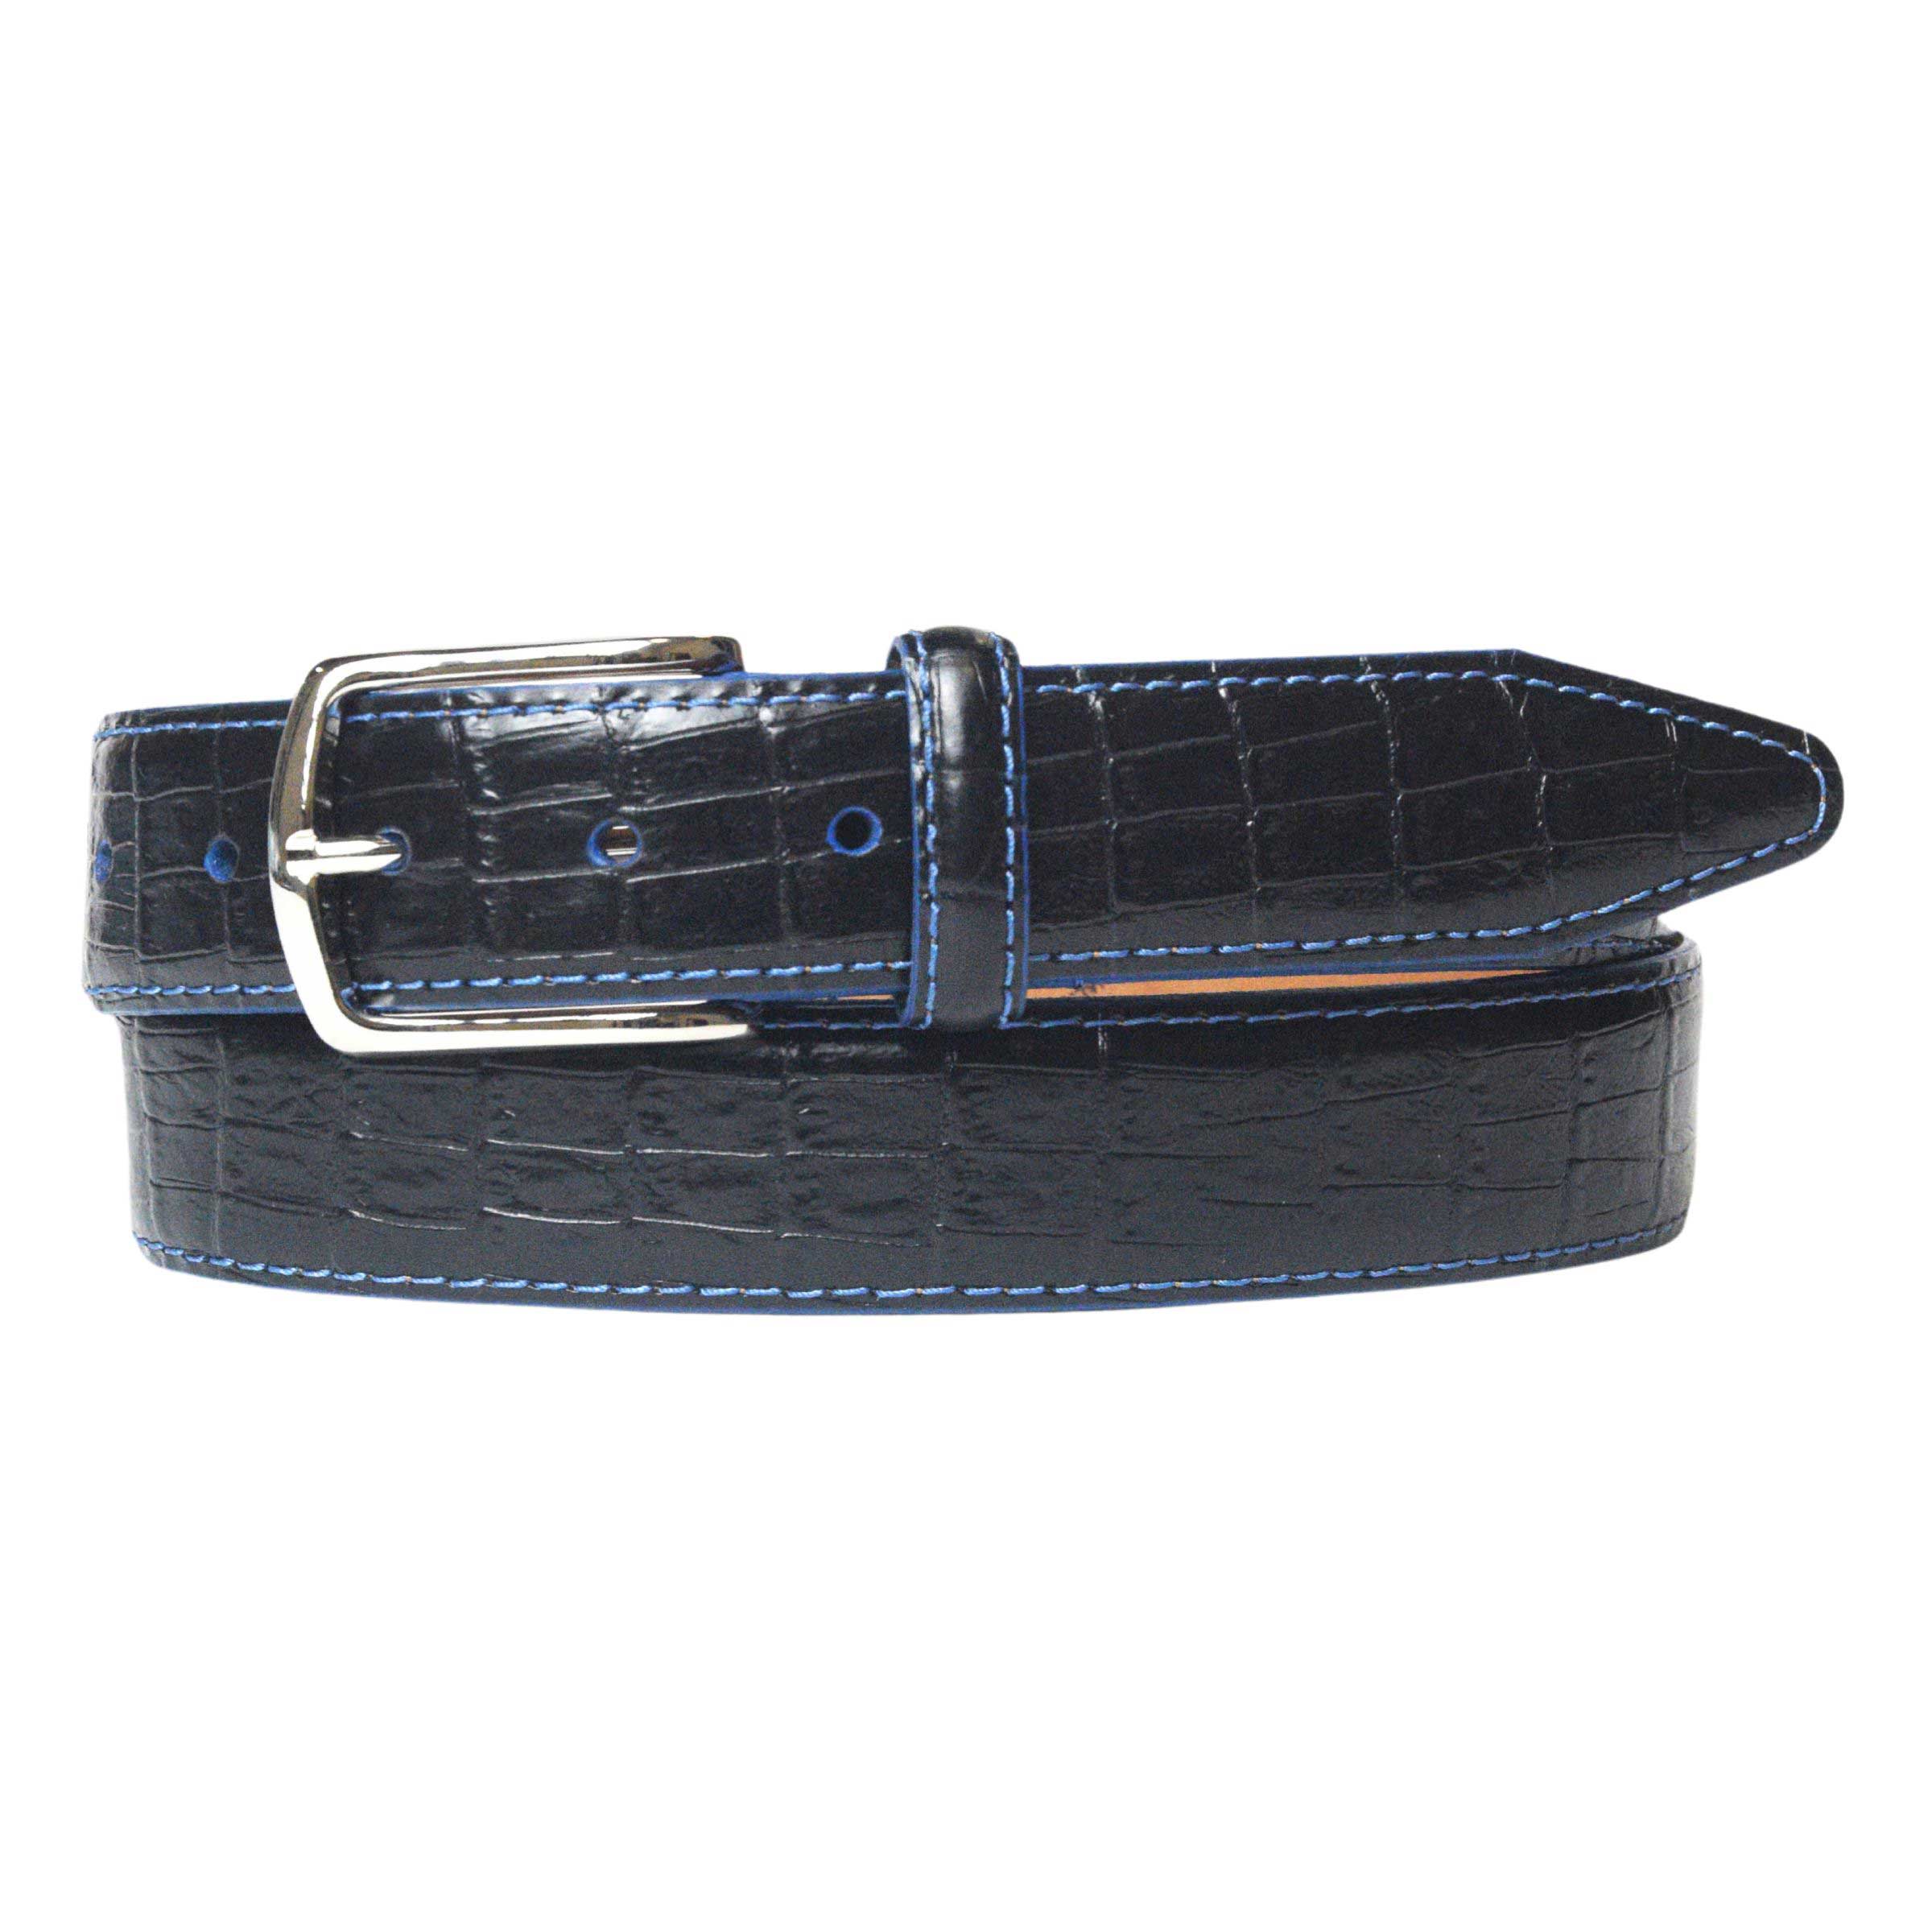 Men's black dress belt with blue stitching